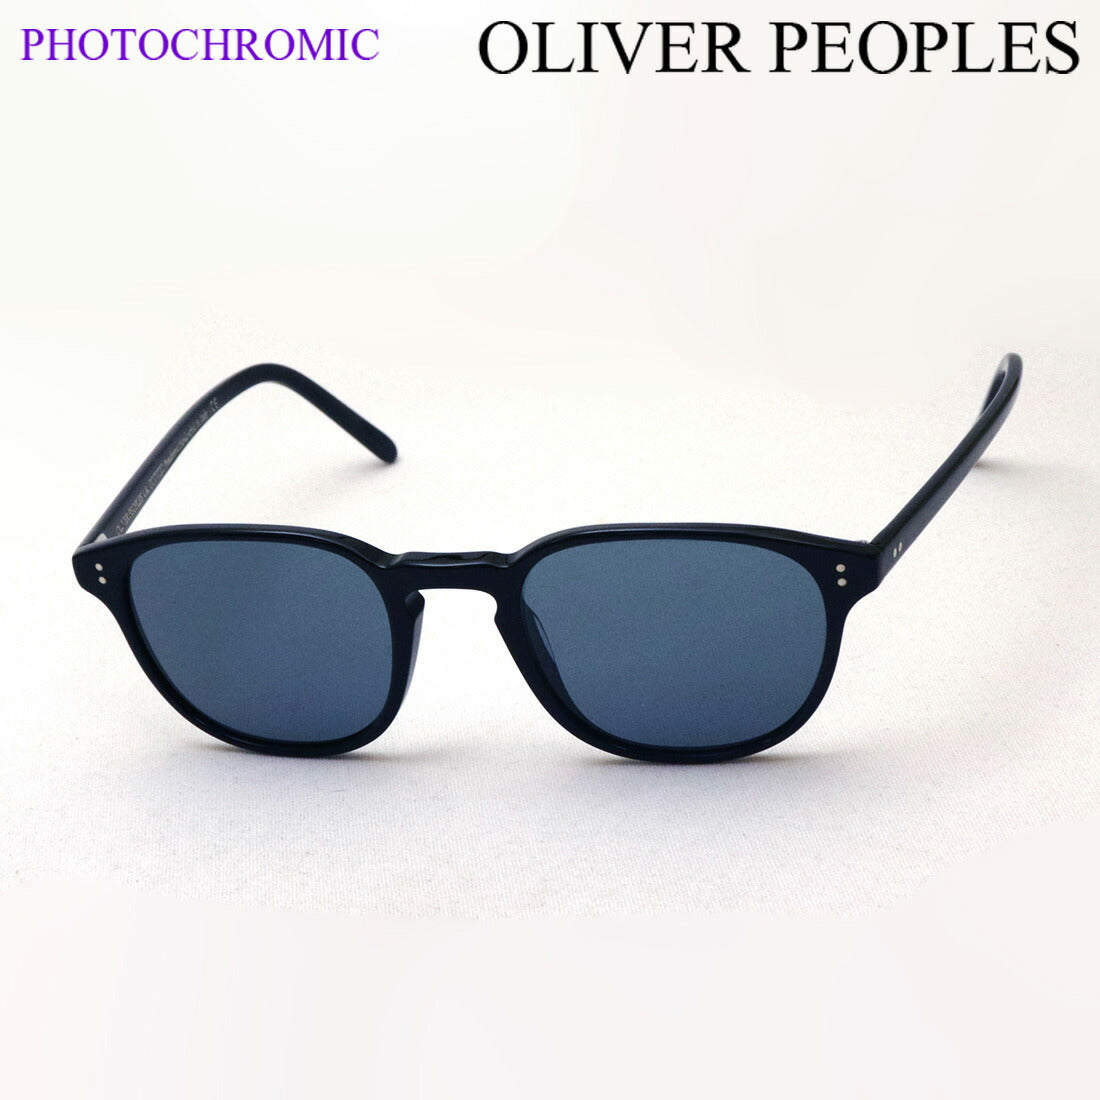 OV66 OLIVER PEOPLES Fiarmont Sun サングラス